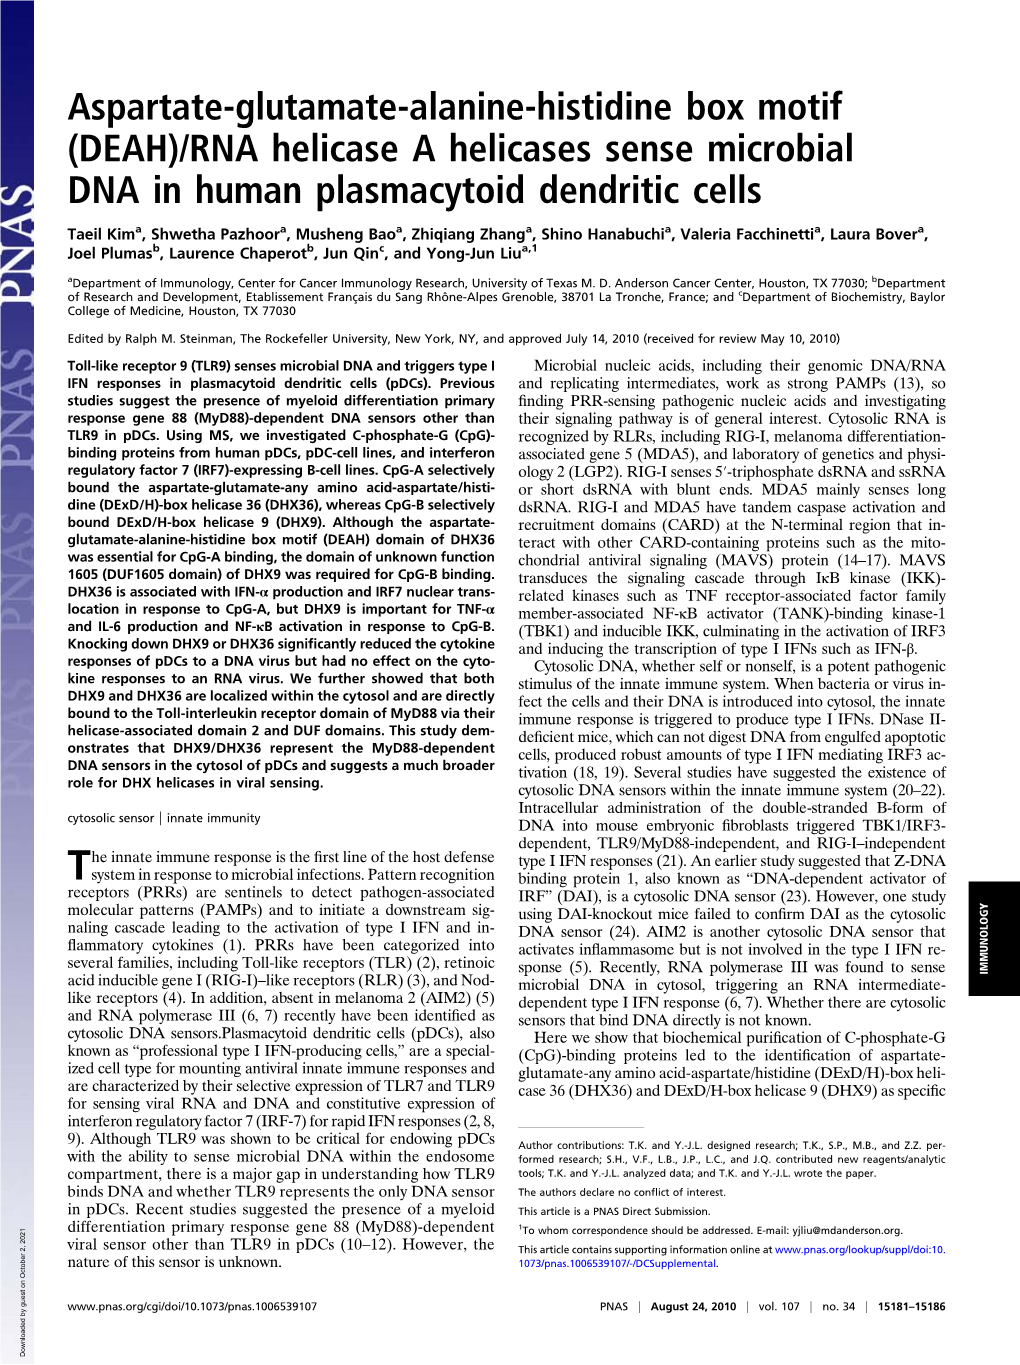 Aspartate-Glutamate-Alanine-Histidine Box Motif (DEAH)/RNA Helicase a Helicases Sense Microbial DNA in Human Plasmacytoid Dendritic Cells